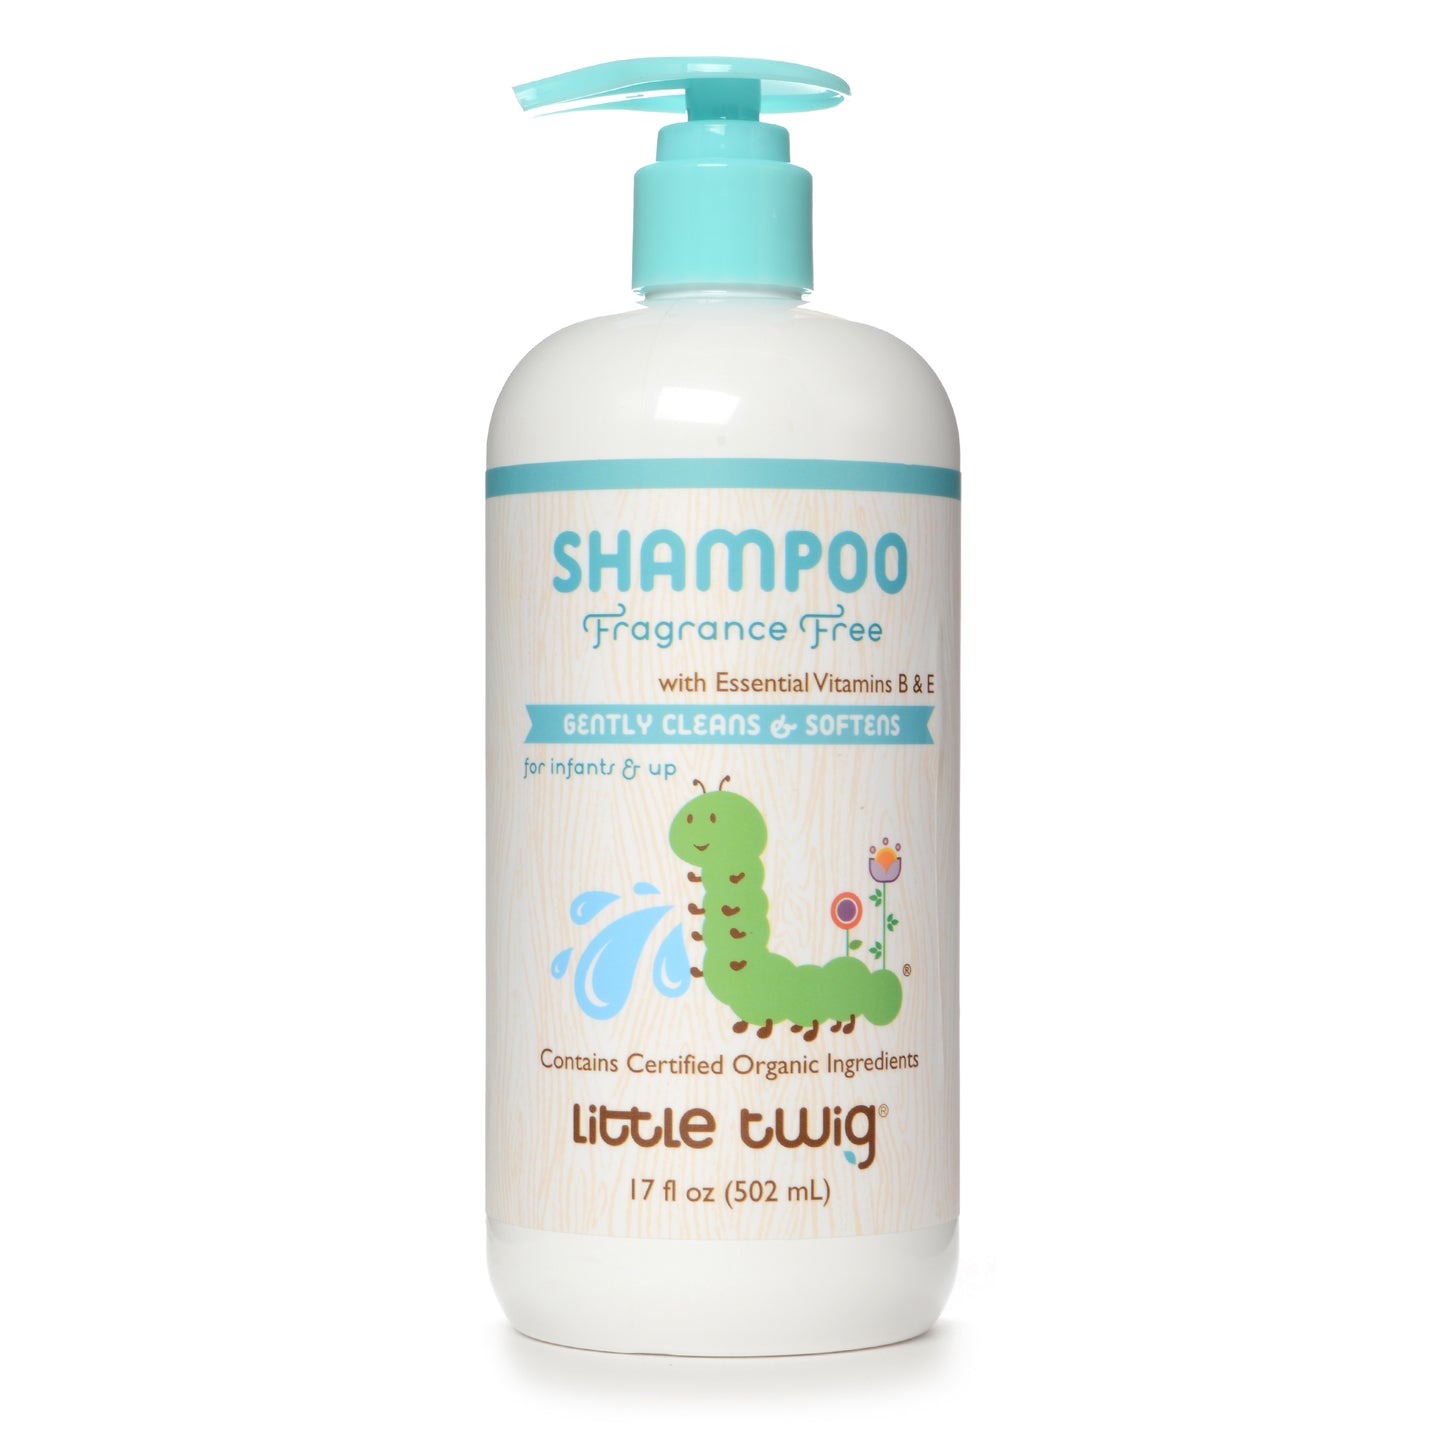 Fragrance Free Shampoo